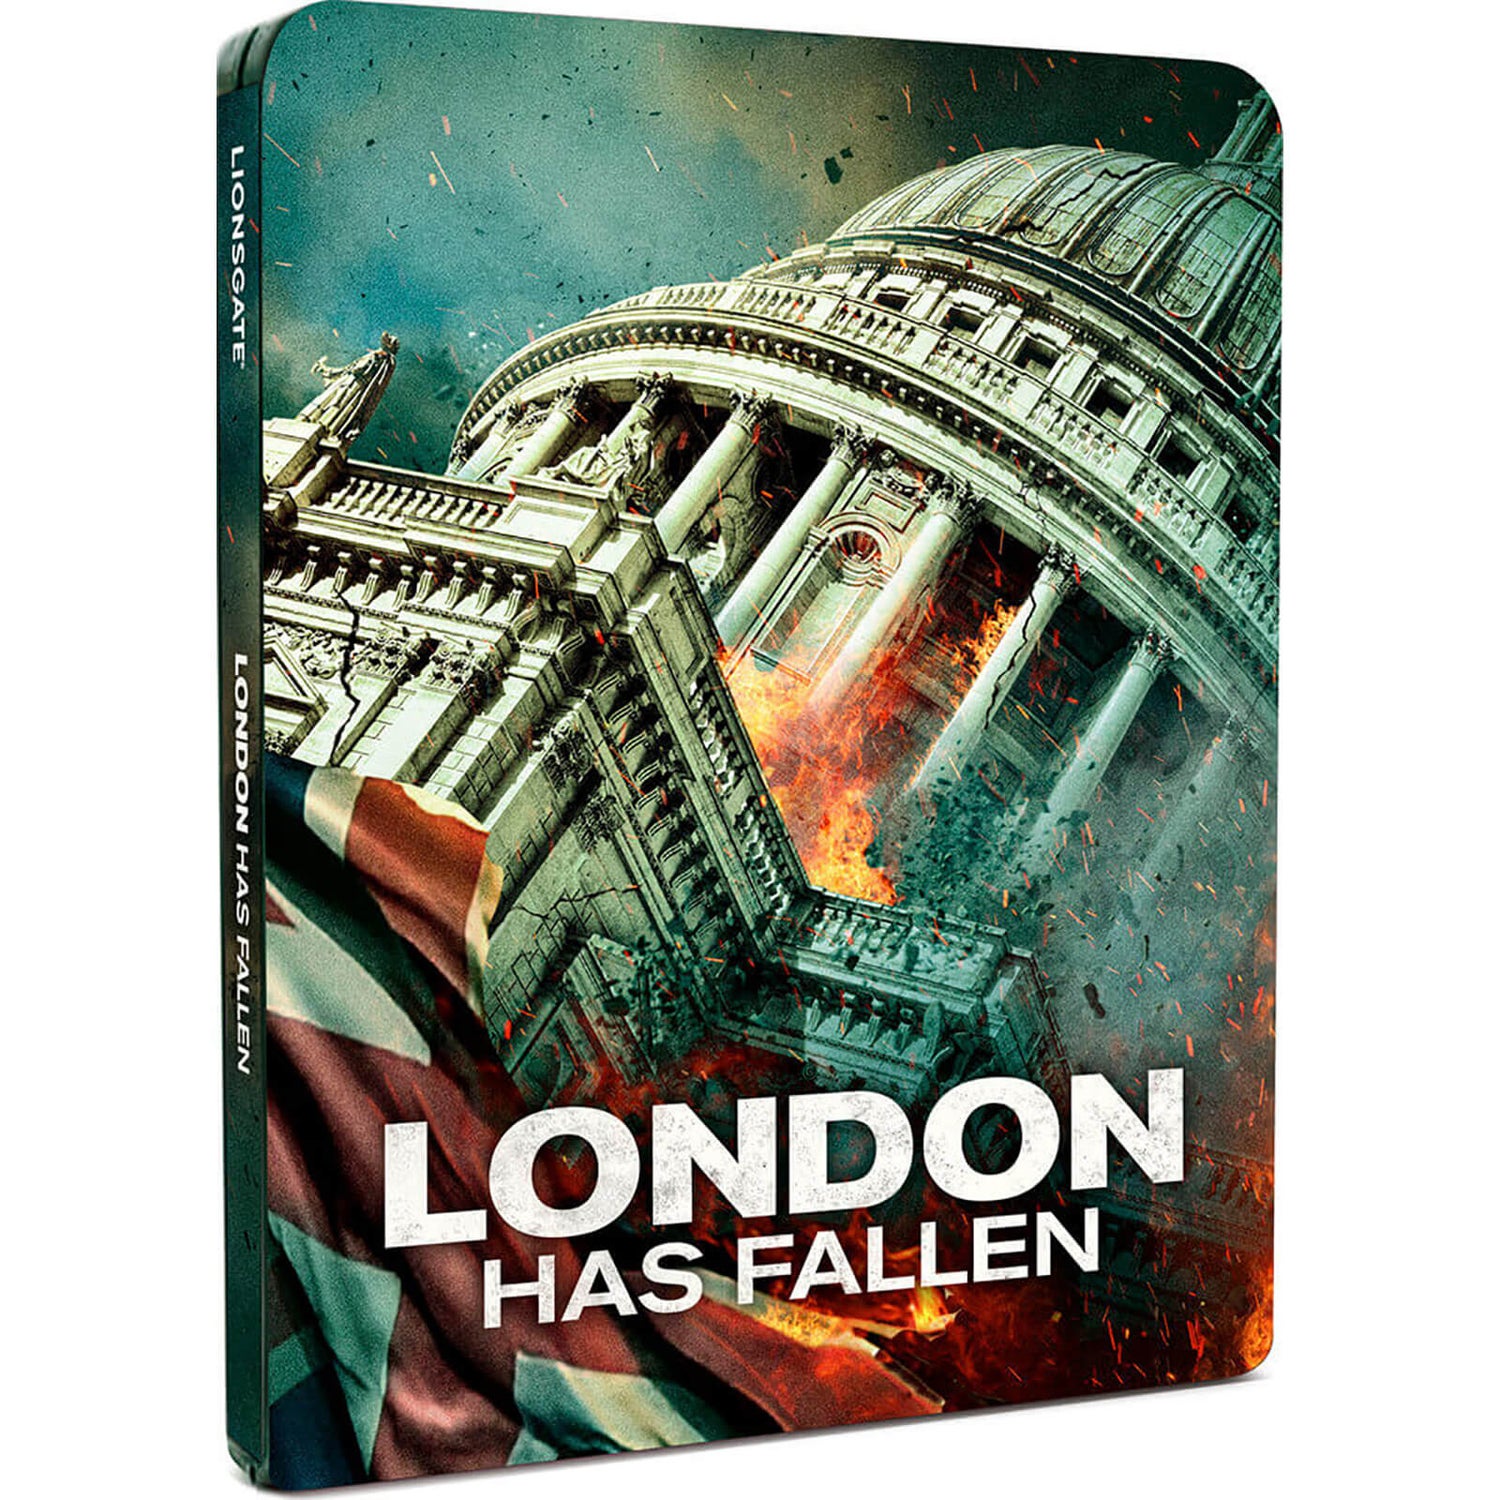 London Has Fallen - Steelbook Edition (UK EDITION)